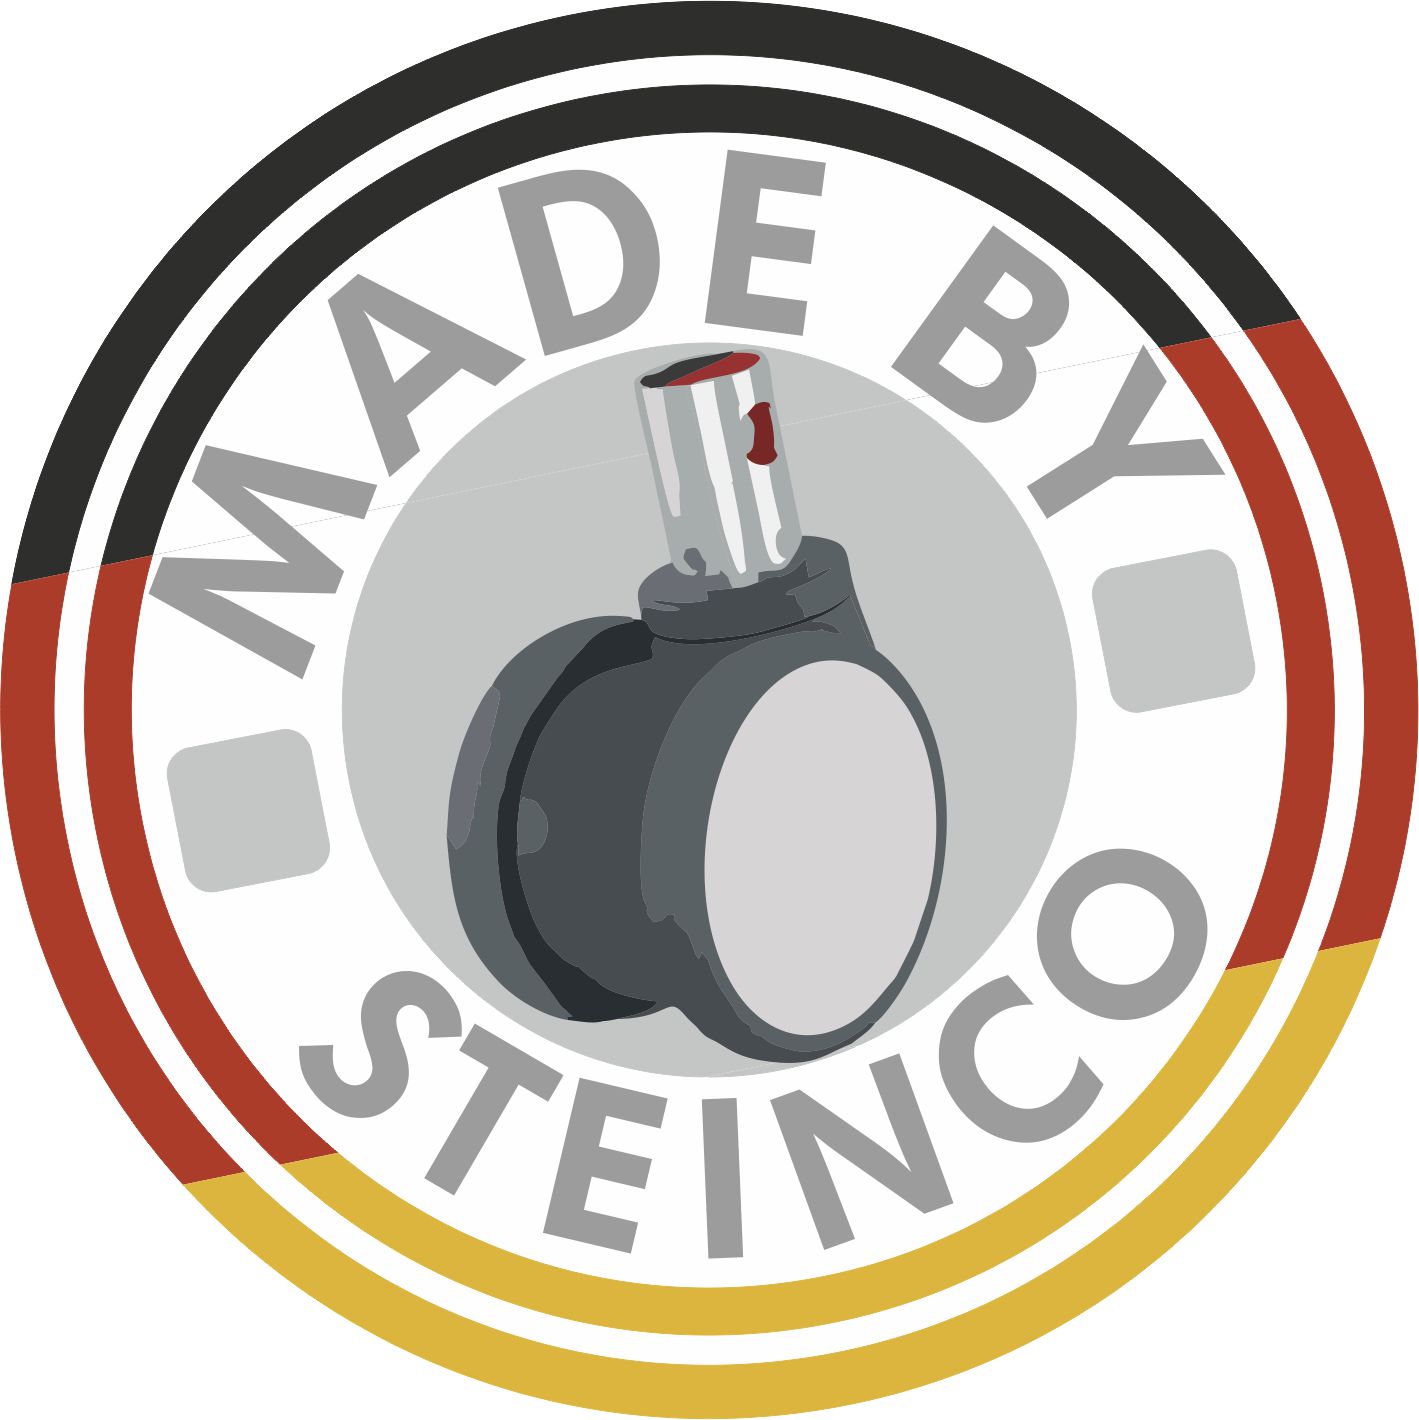 [Translate to Italienisch:] Rollen und Räder - Made by STEINCO and Made in Germany